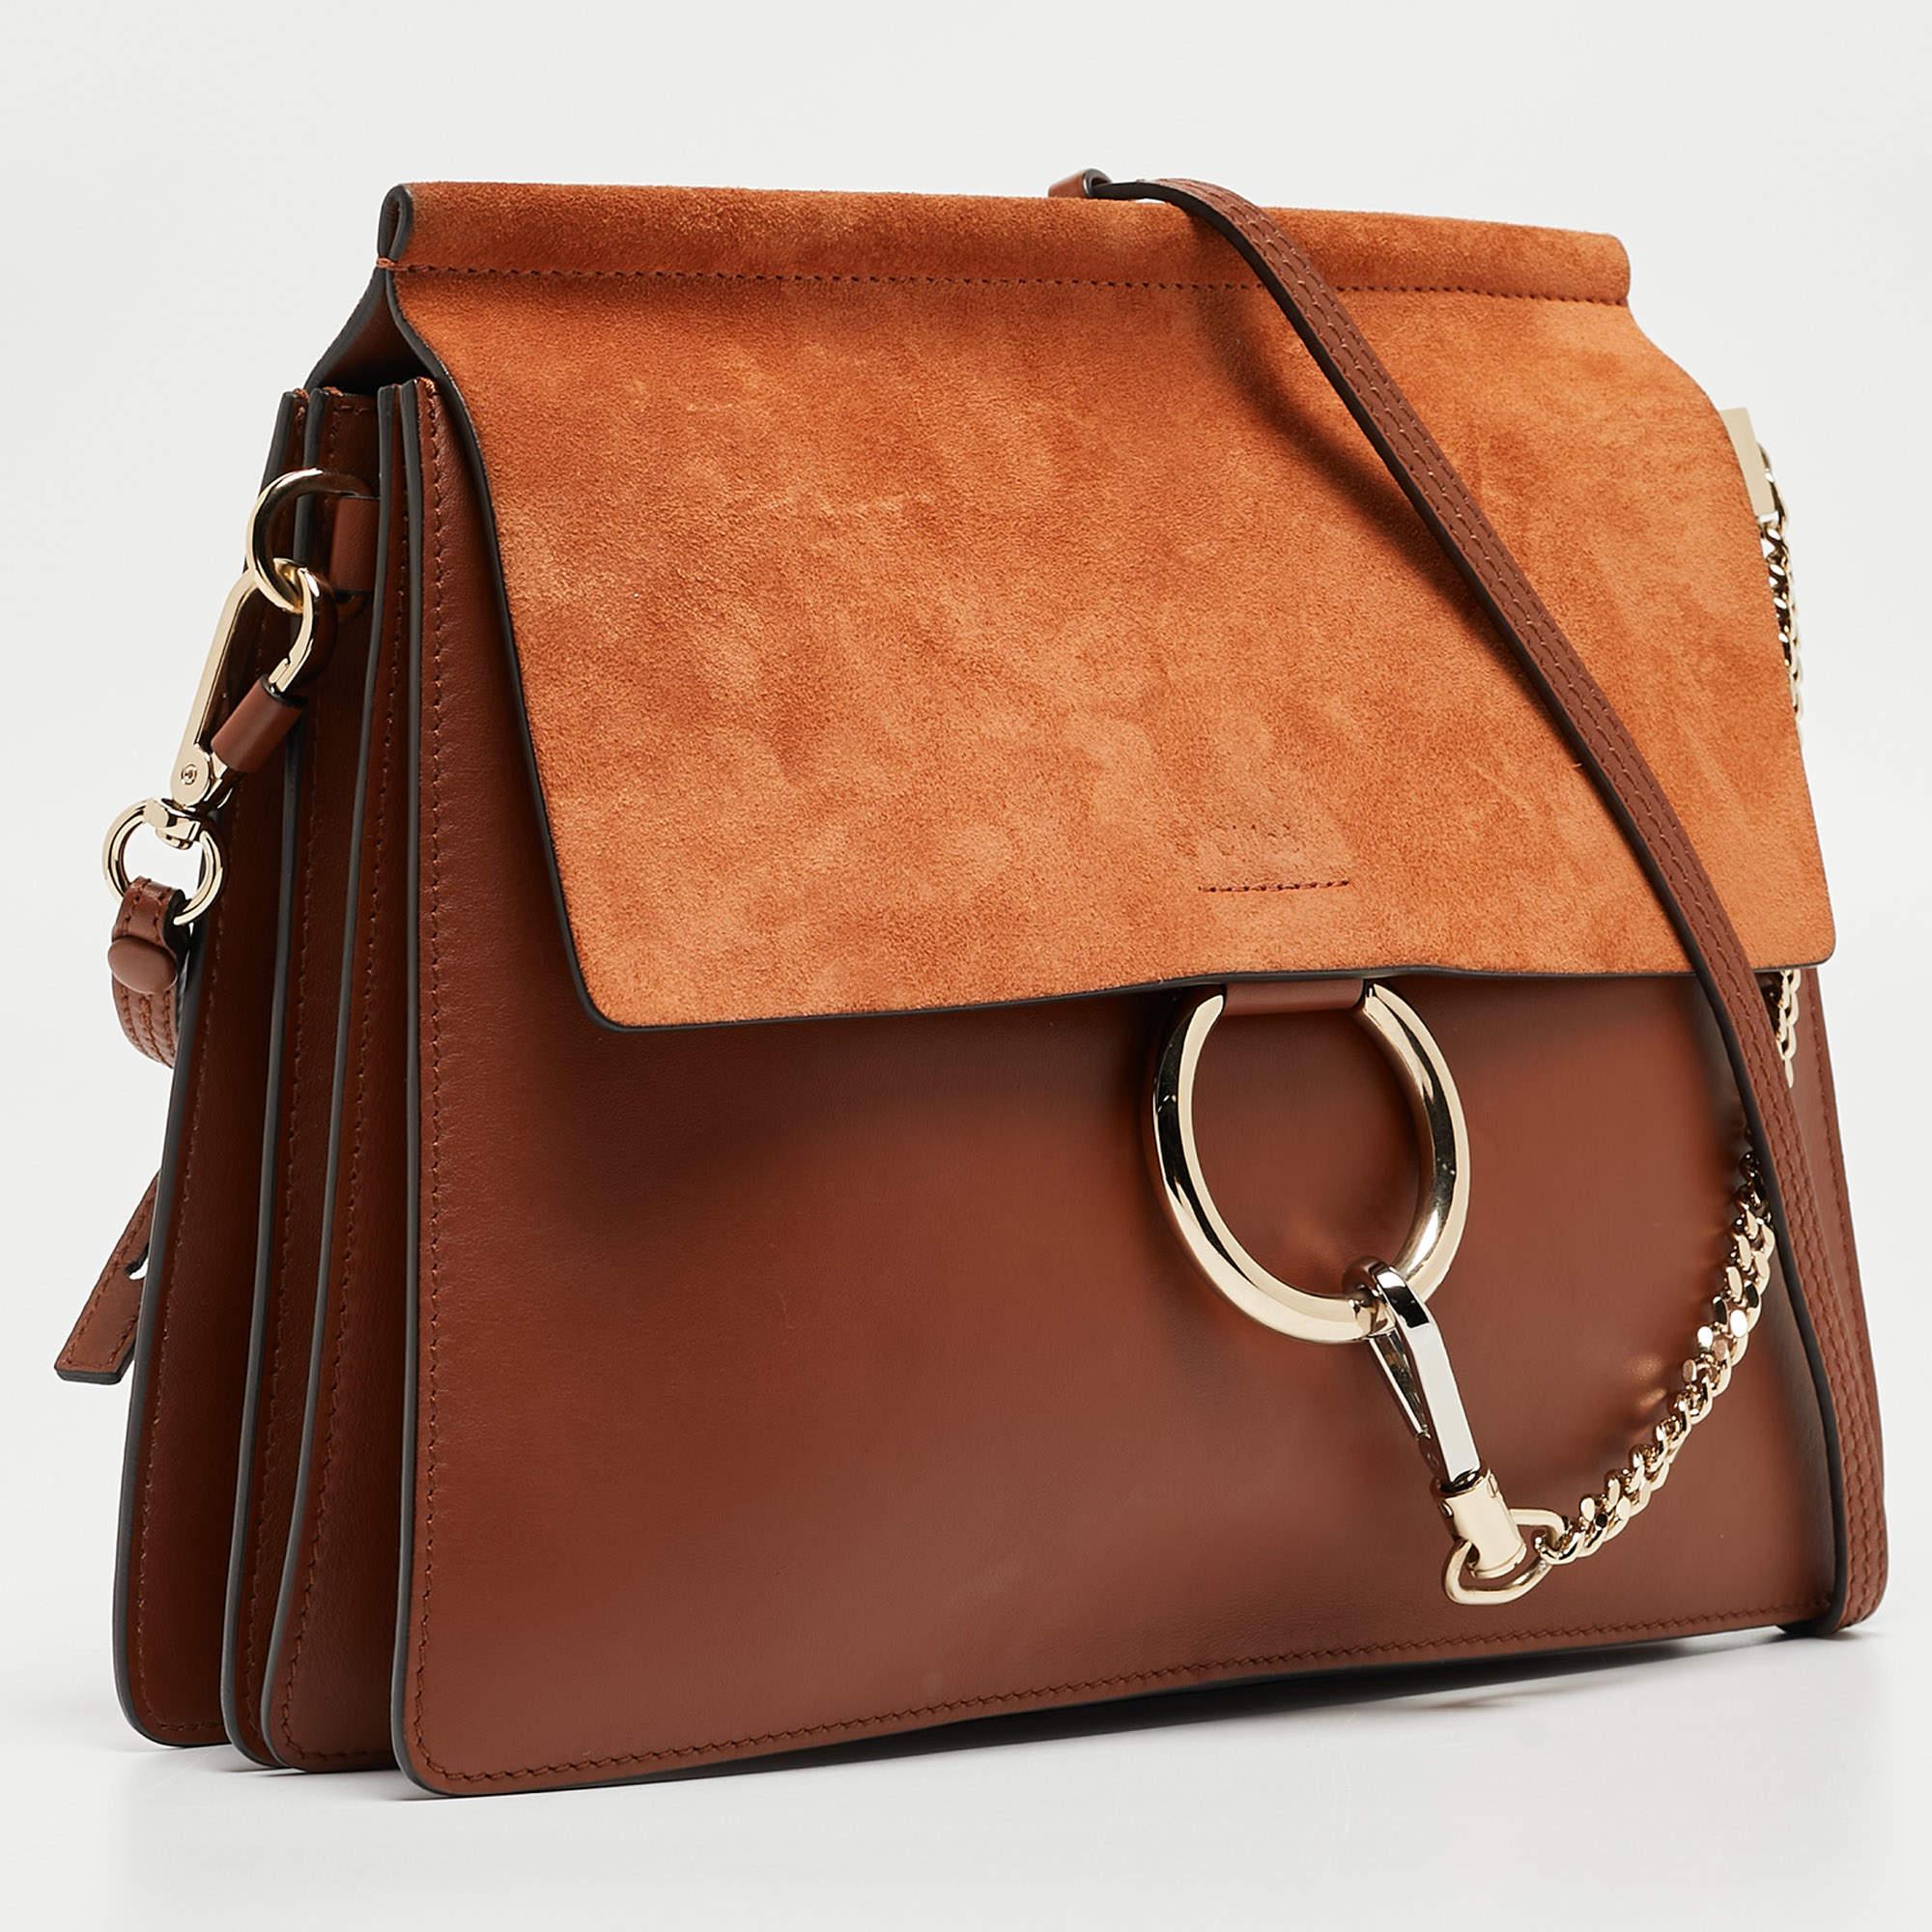 Chloe Brown Leather and Suede Medium Faye Shoulder Bag In Good Condition For Sale In Dubai, Al Qouz 2